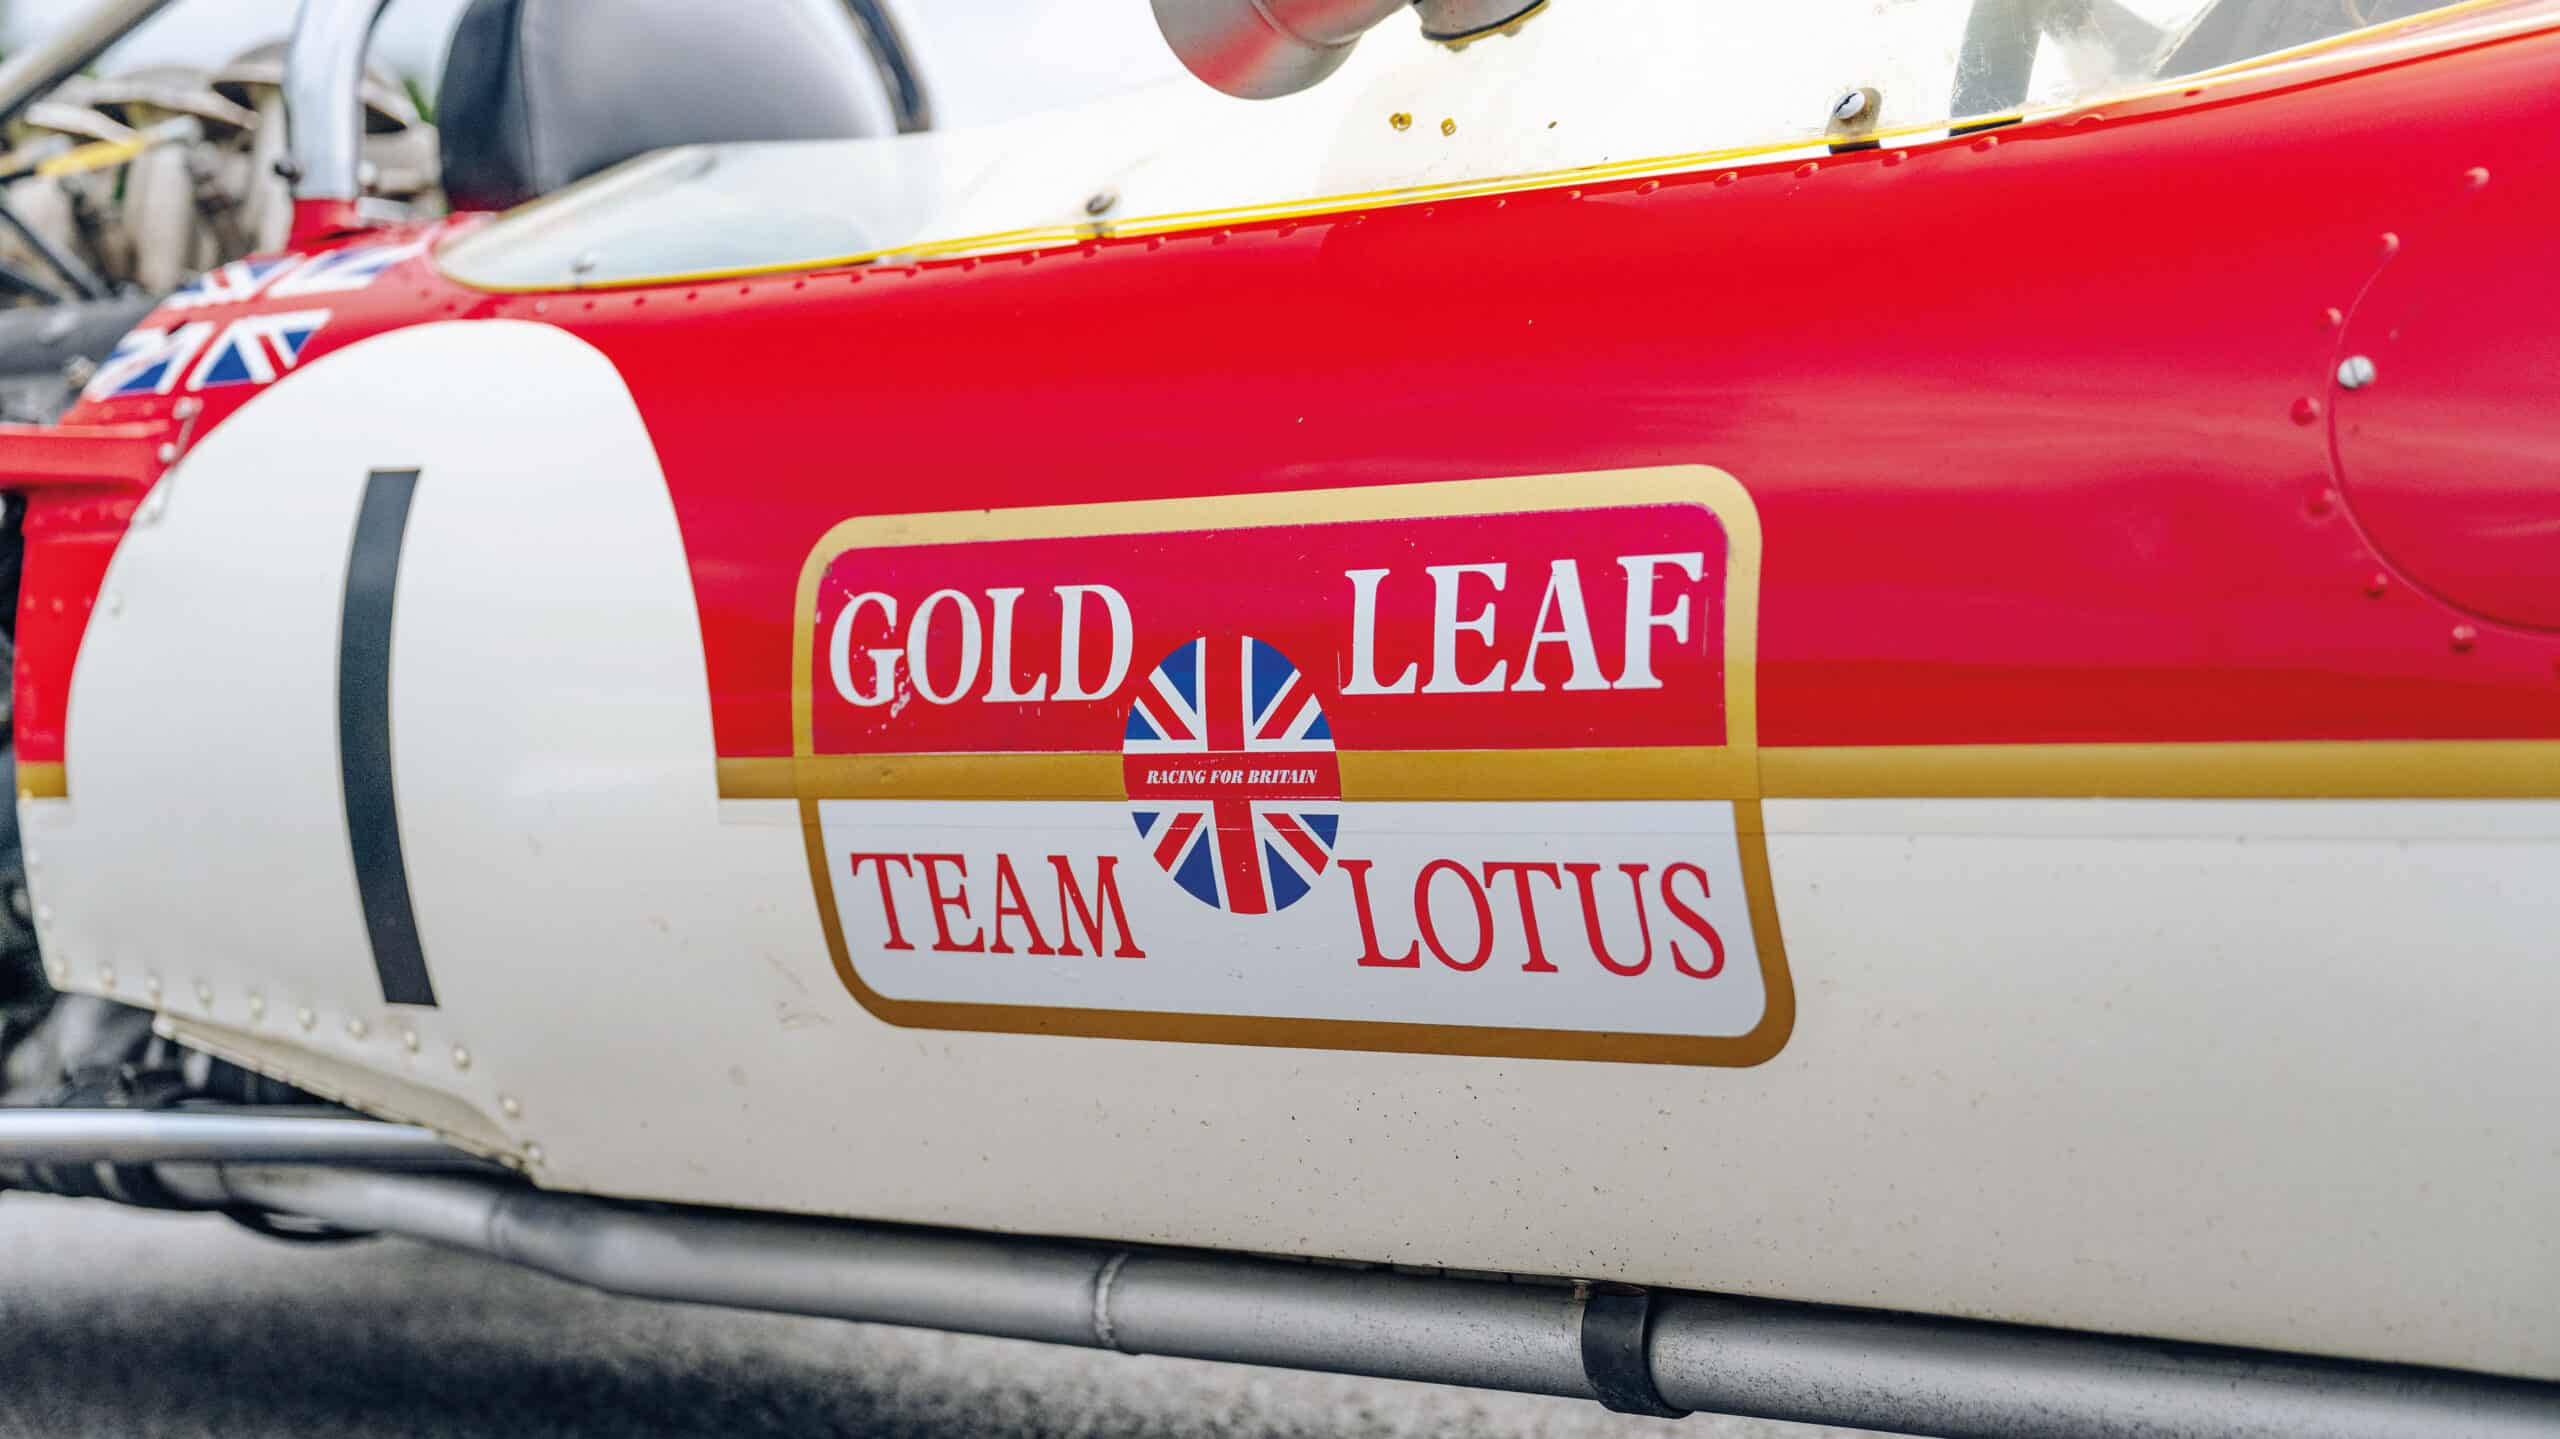 Gold Leaf, Lotus 49